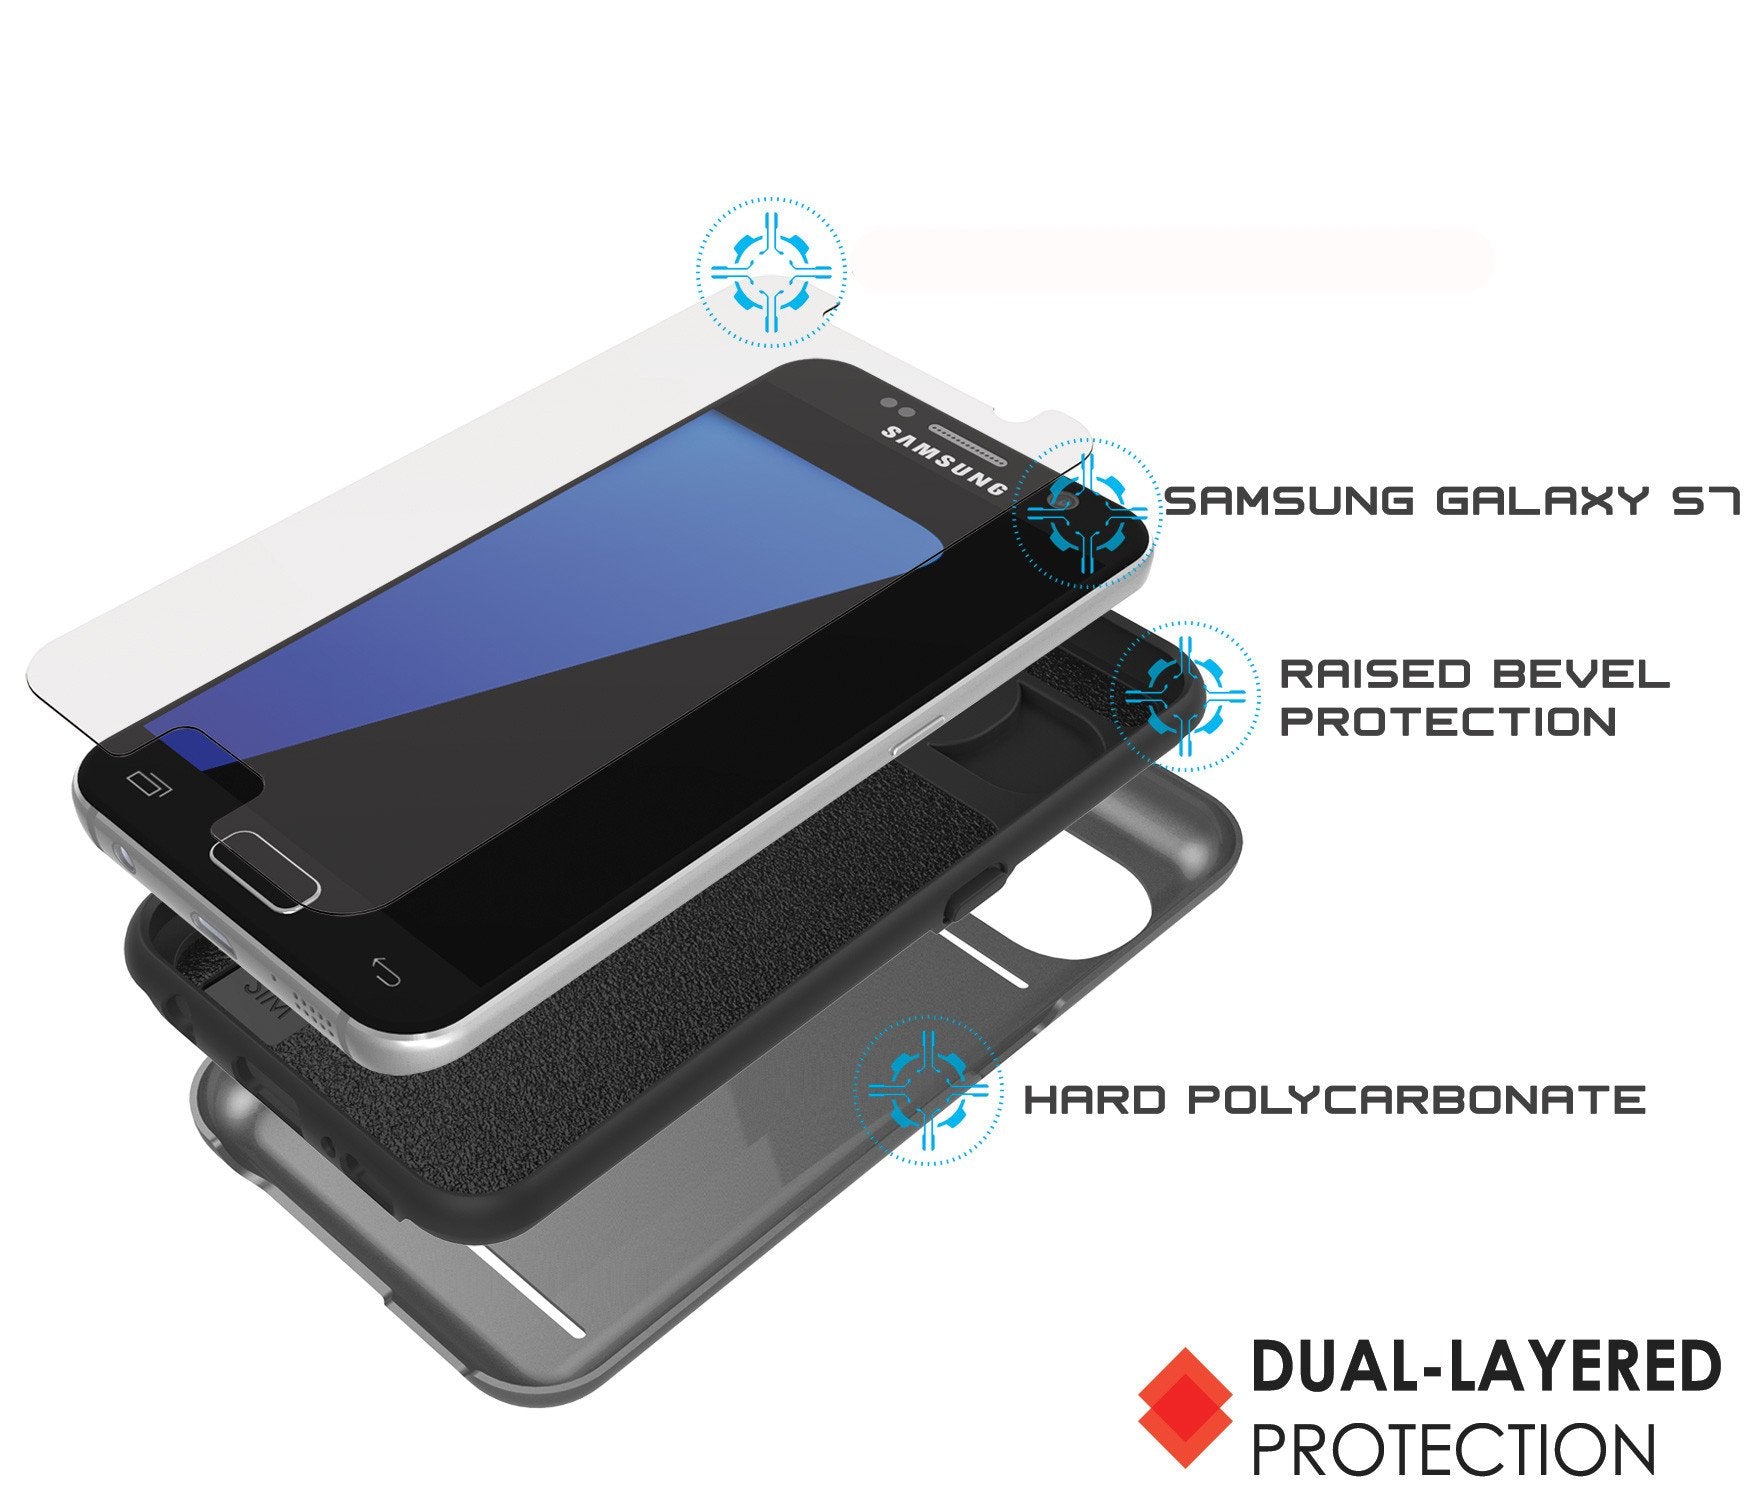 Galaxy S7 EDGE Case PunkCase CLUTCH Grey Series Slim Armor Soft Cover Case w/ Screen Protector